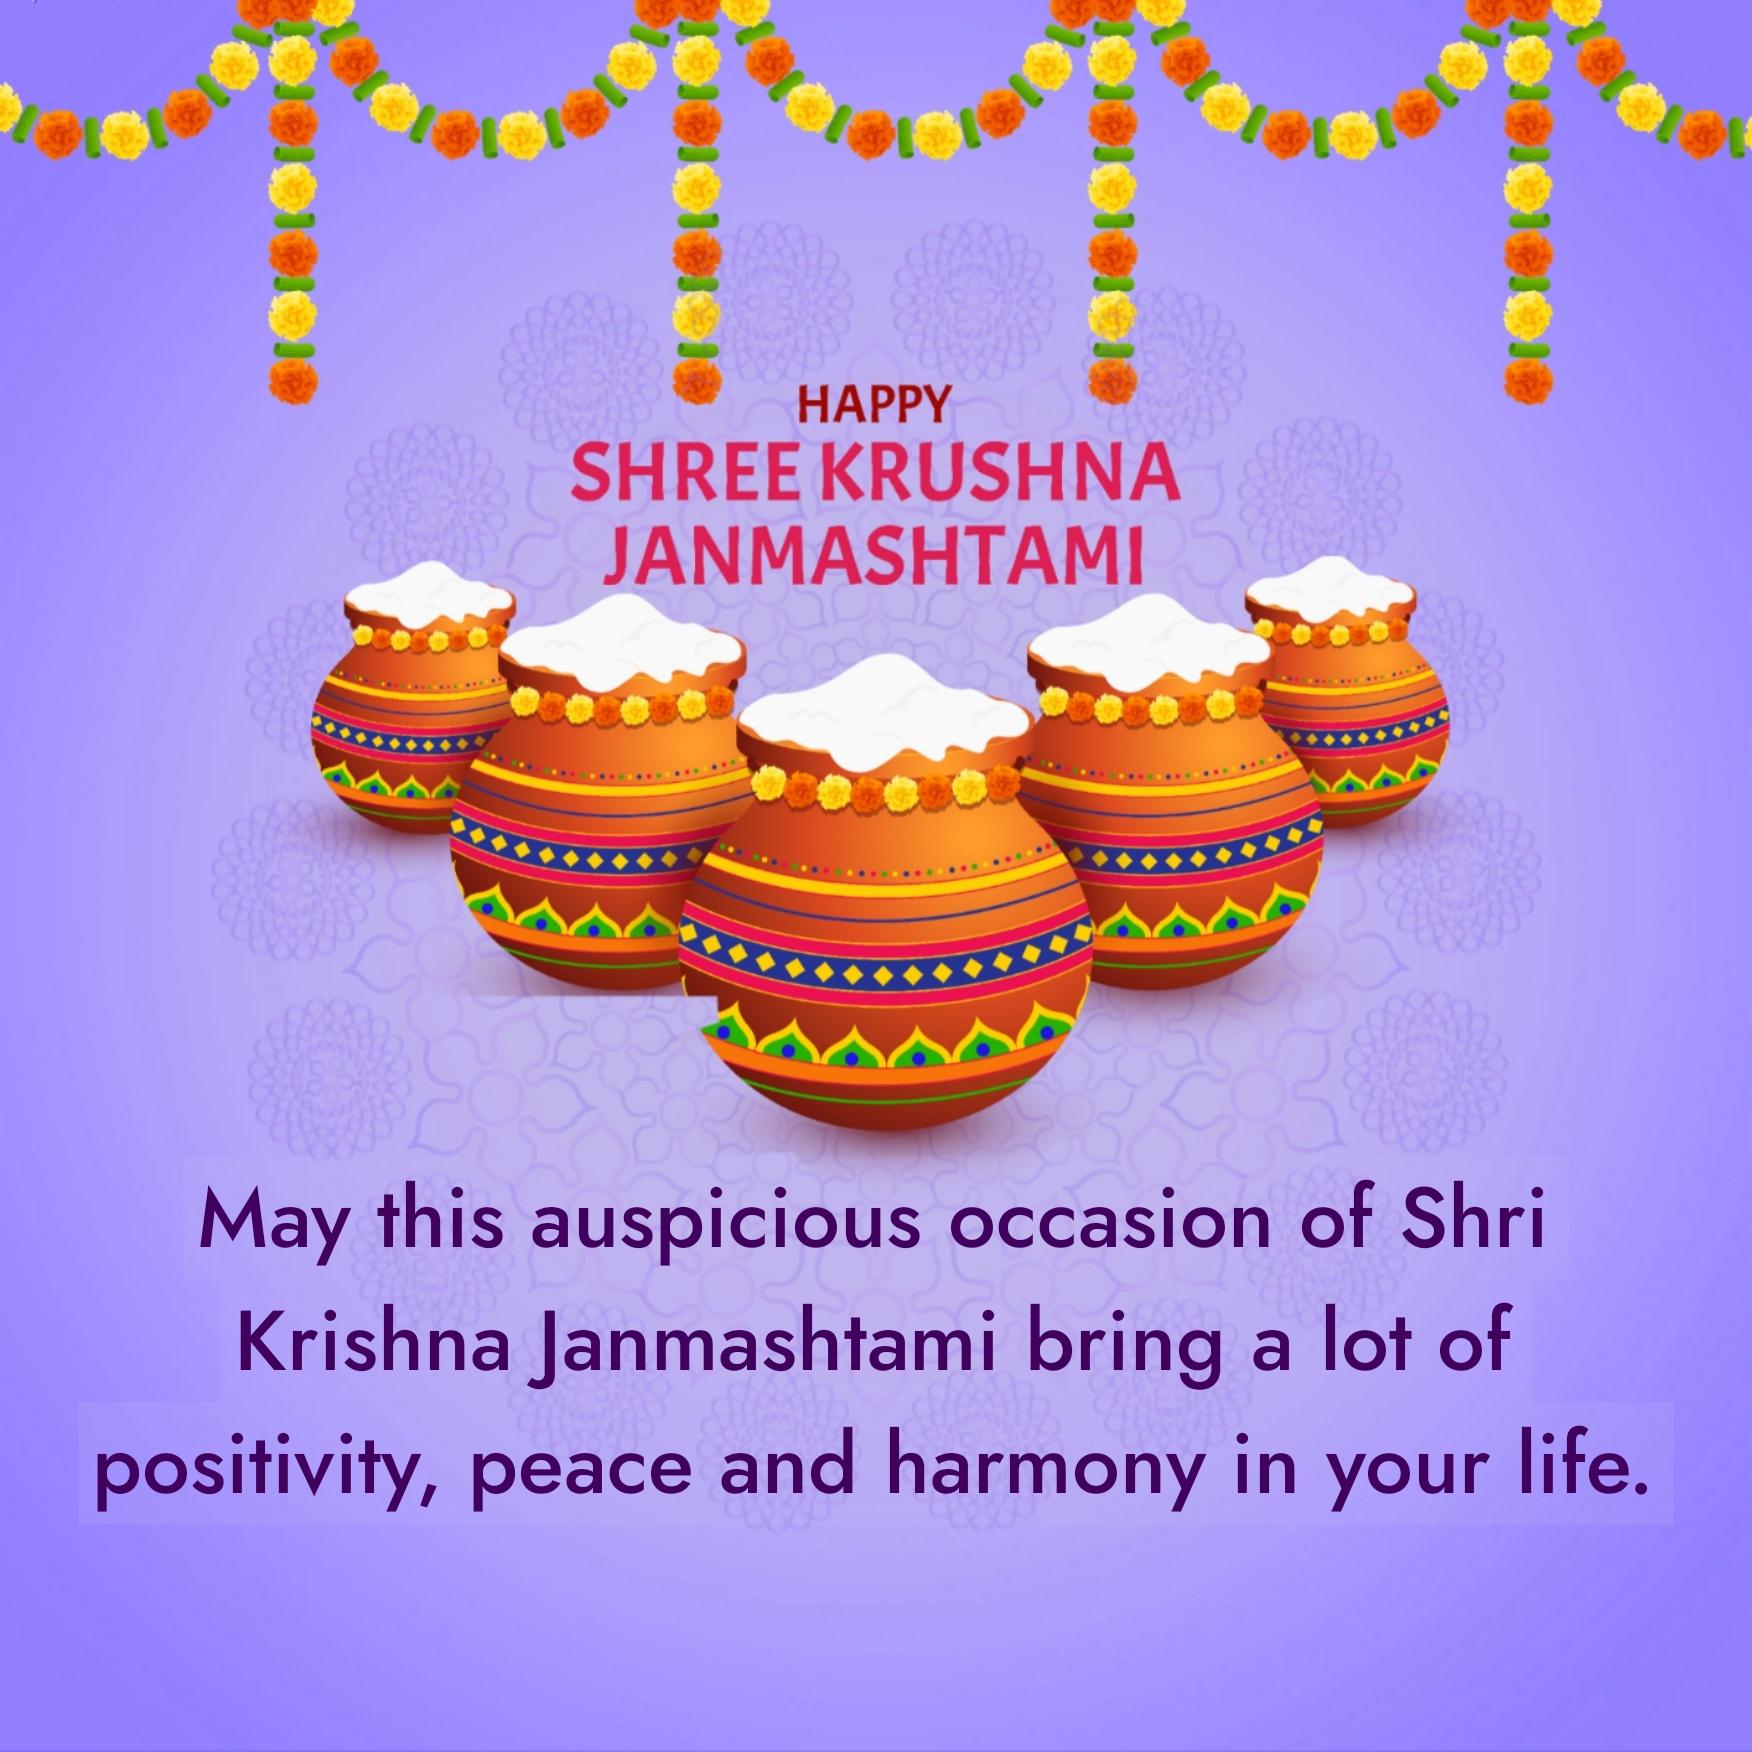 May this auspicious occasion of Shri Krishna Janmashtami bring a lot of positivity